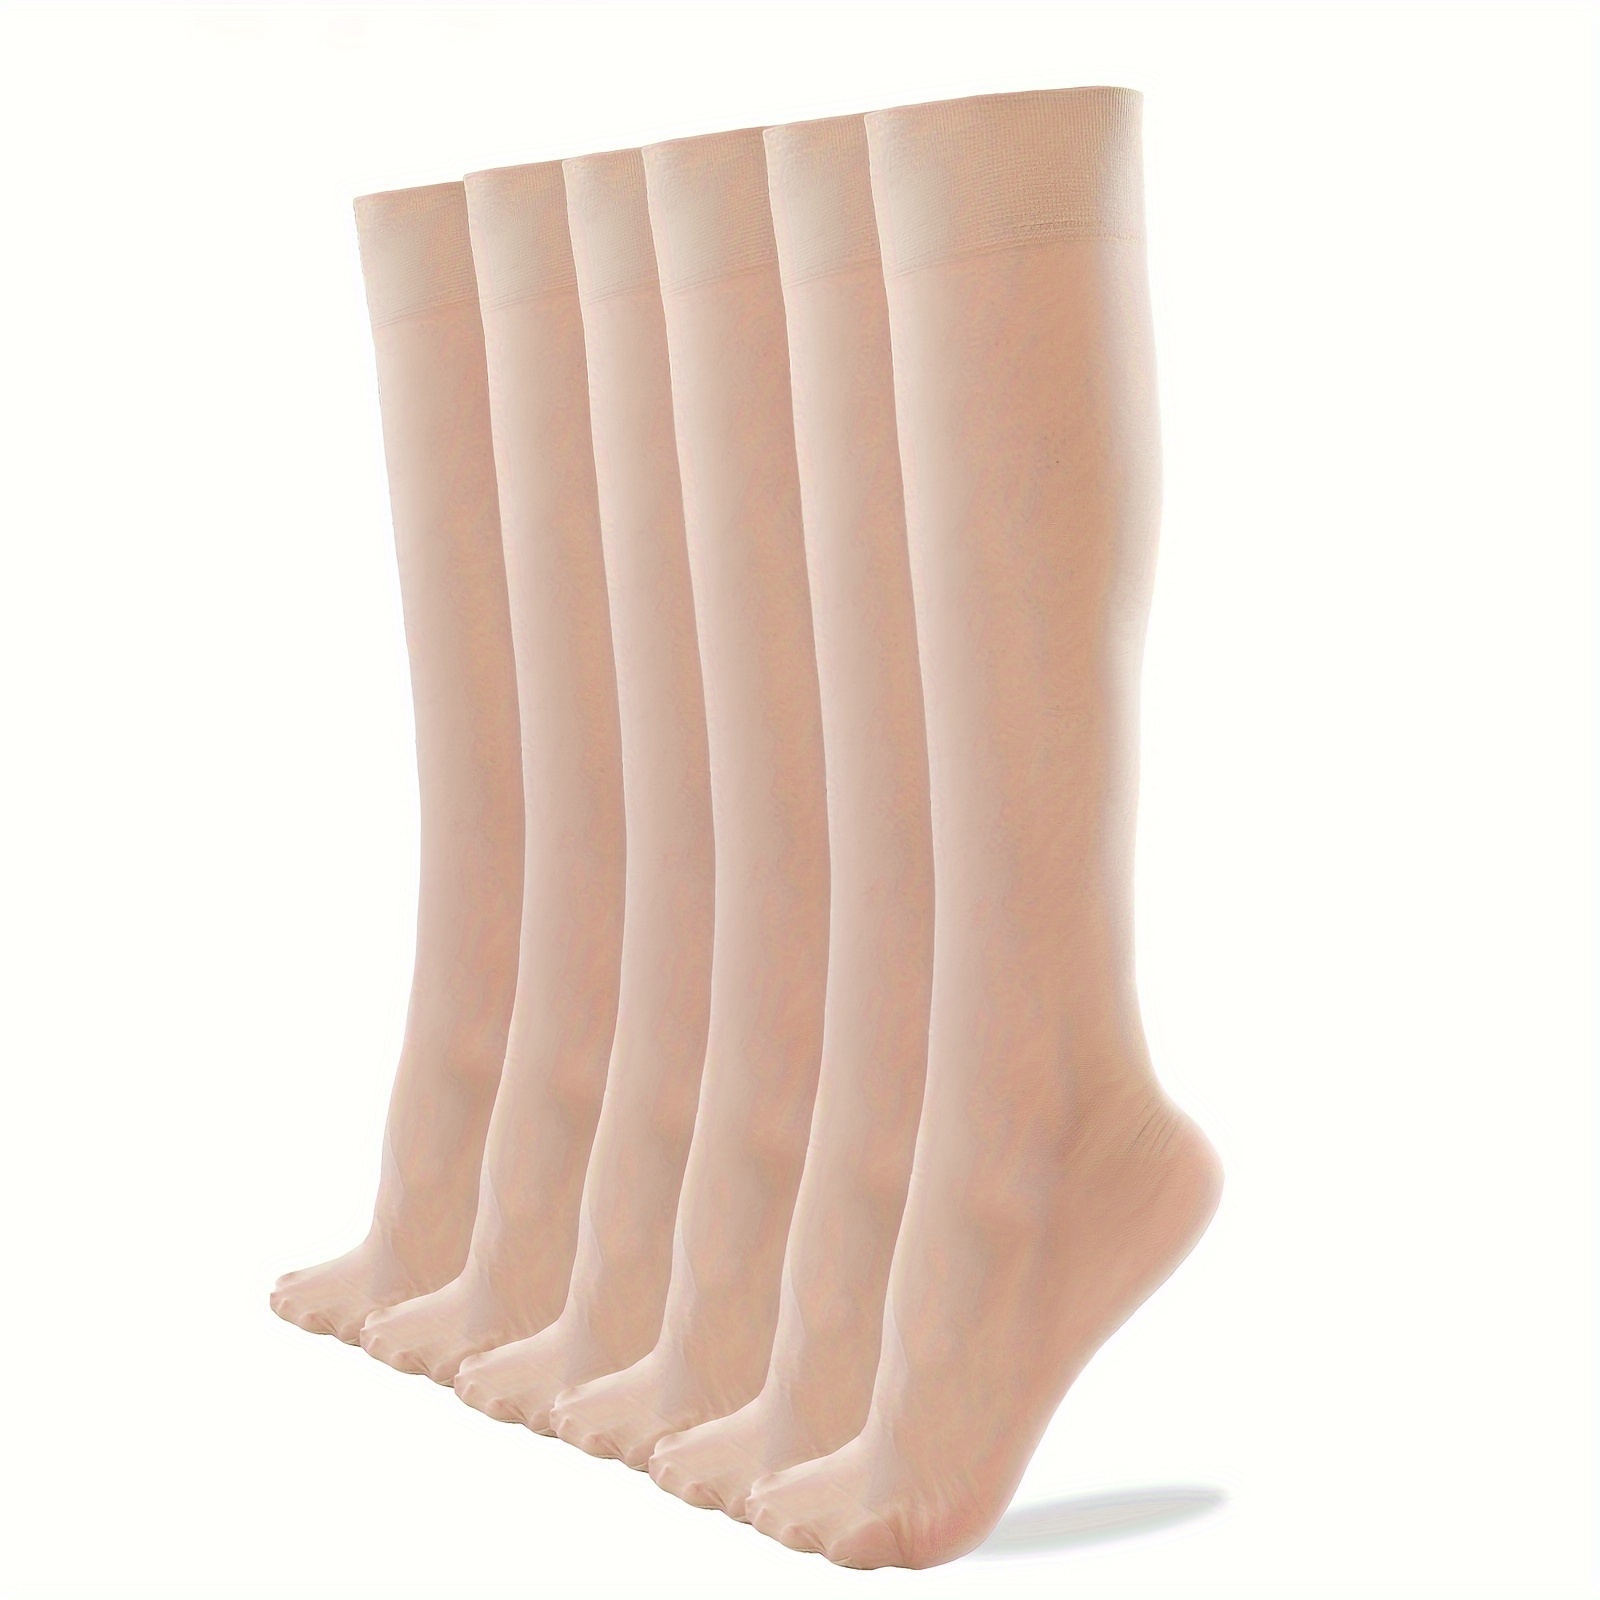 

6 Pairs Simple Solid Calf Socks, All-match Knee High Socks, Women's Stockings & Hosiery